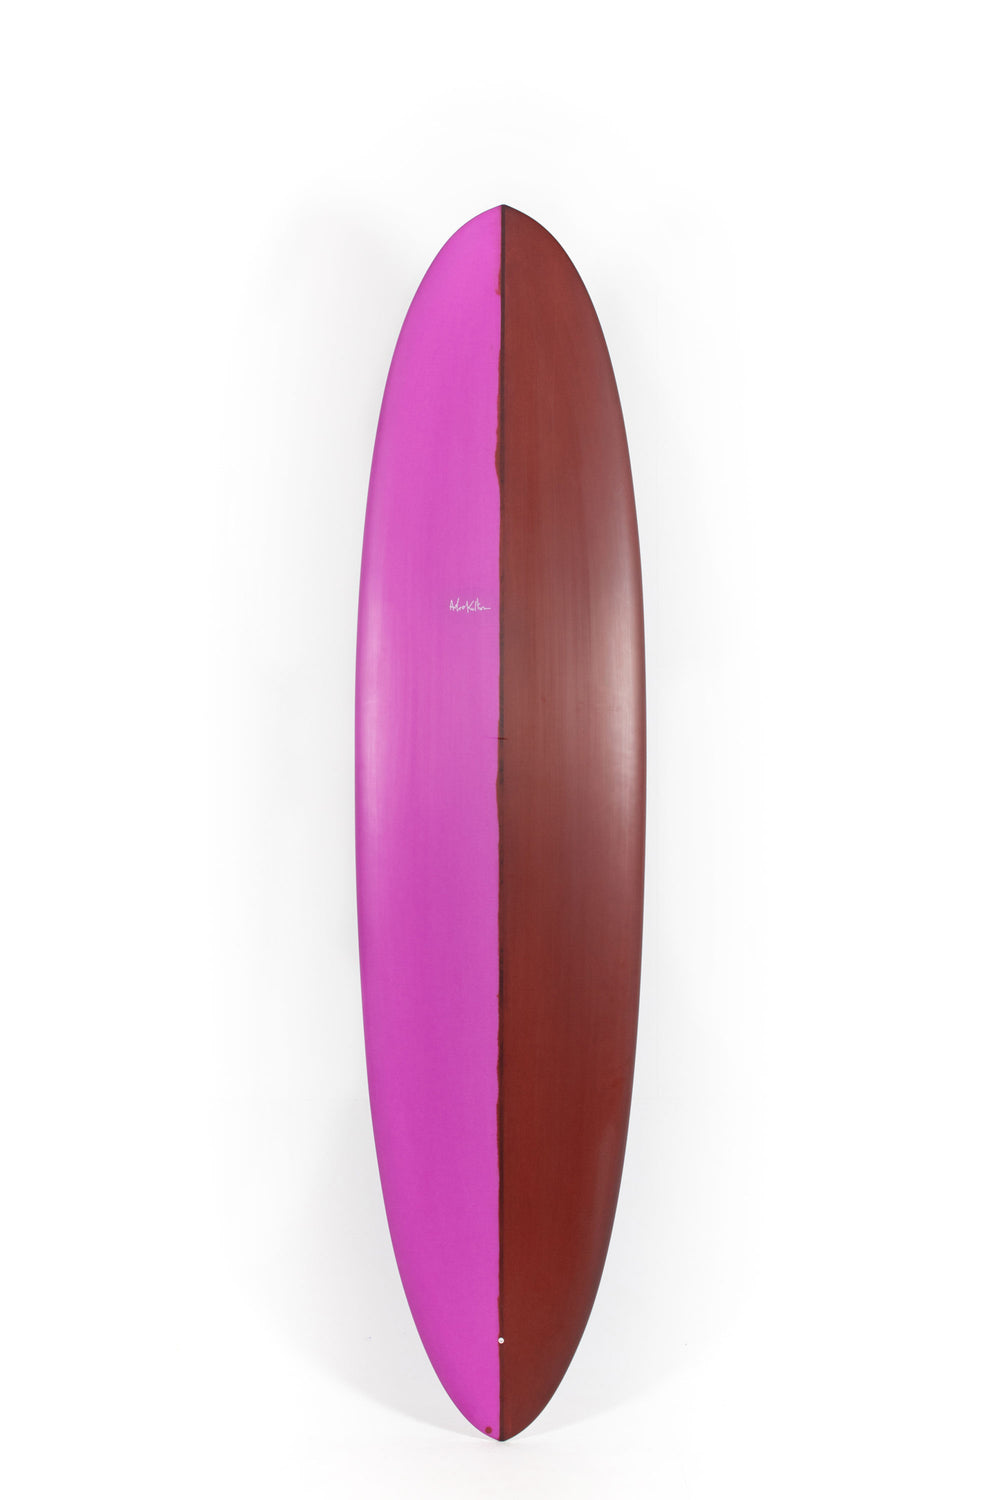 Pukas Surf Shop - Adrokultura Surfboards - SINGLE EGG - 7'8